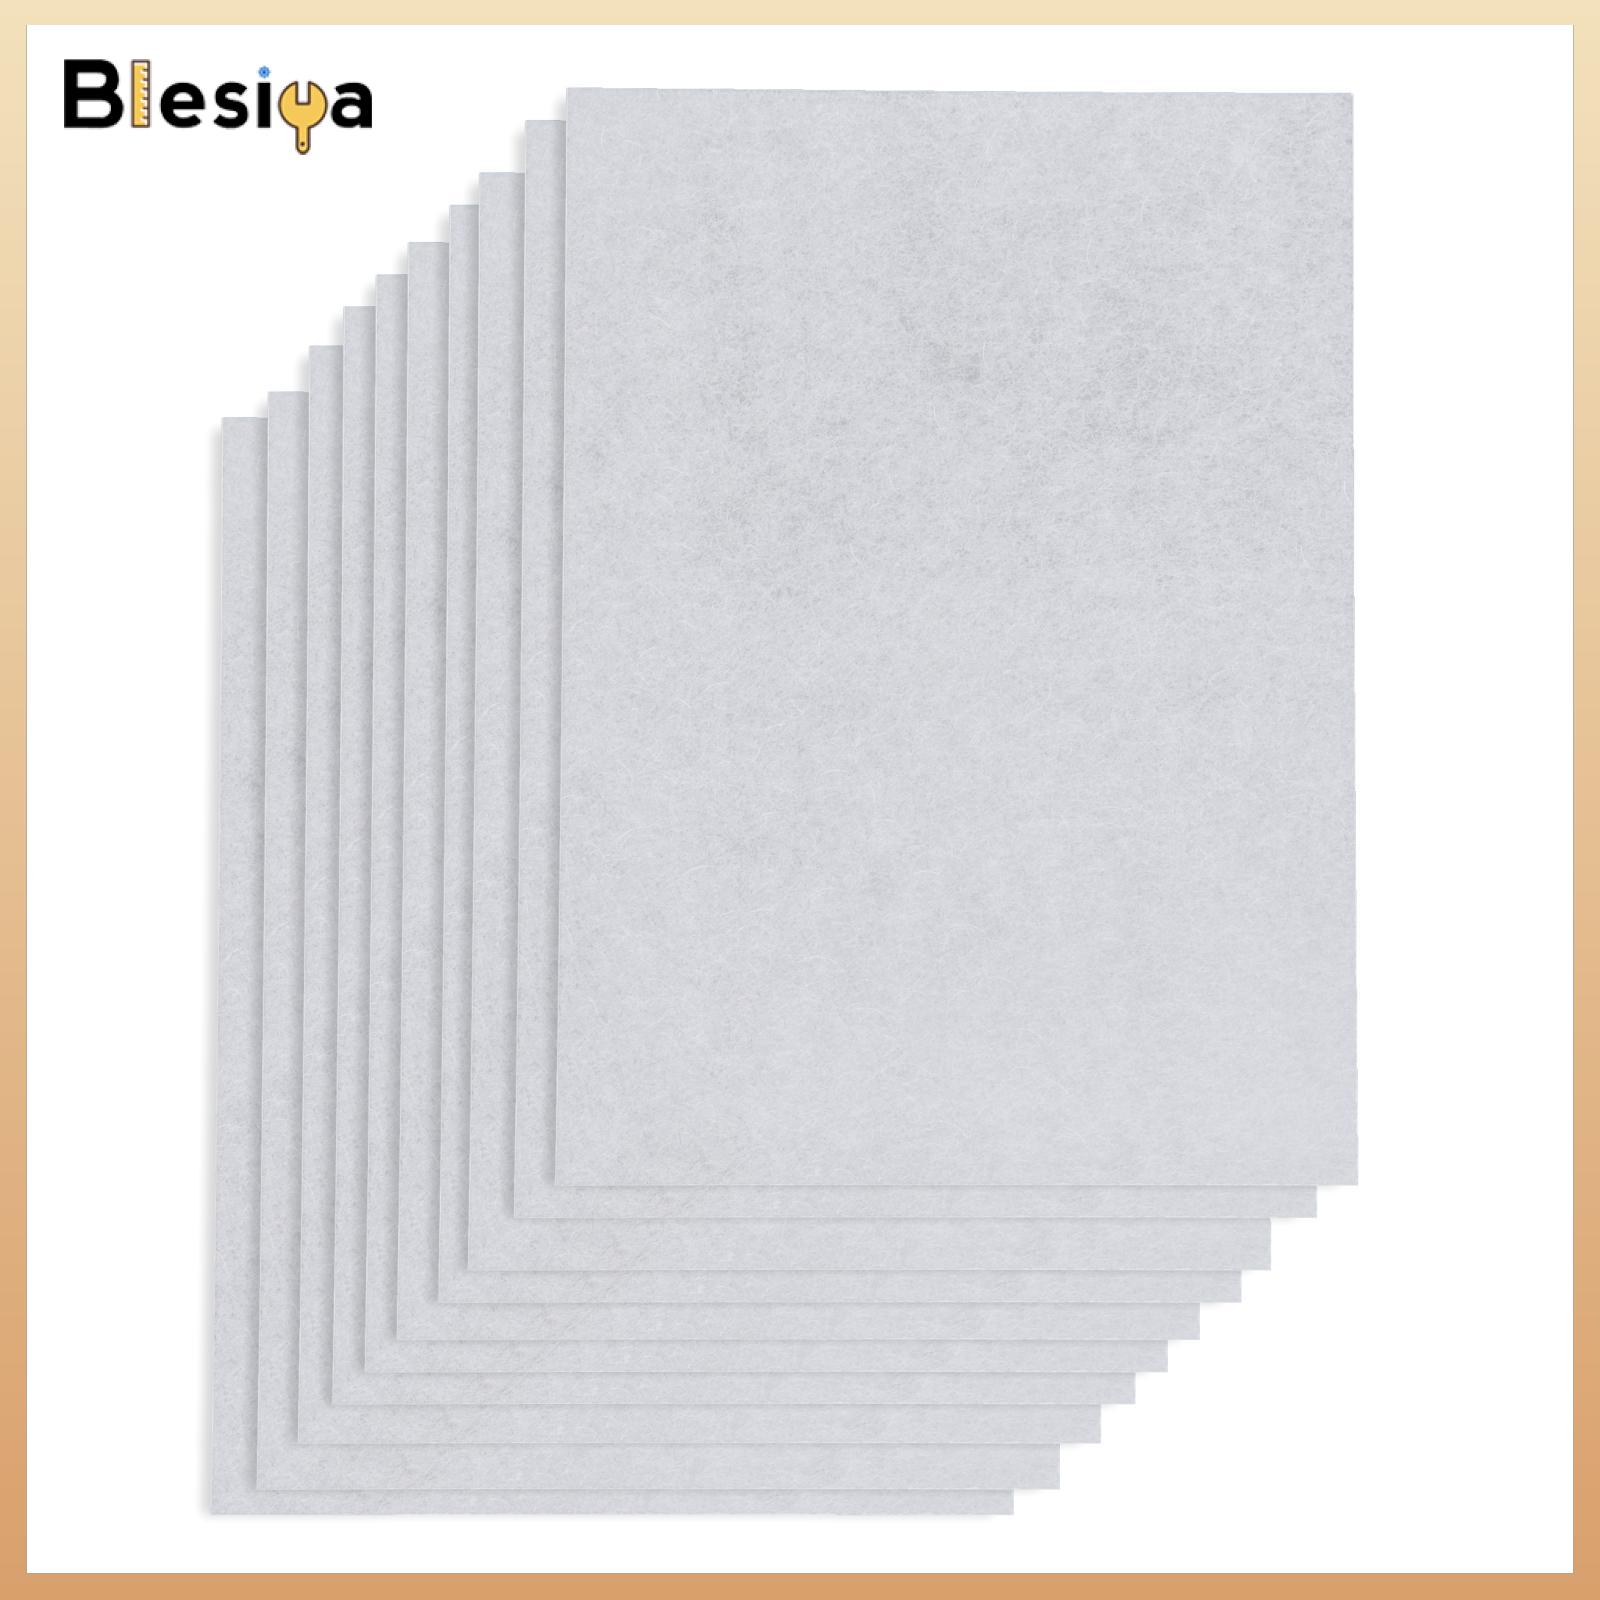 Blesiya 10x Heat Shrink Papers Crafts Making Sheet Printable Art Jewelry